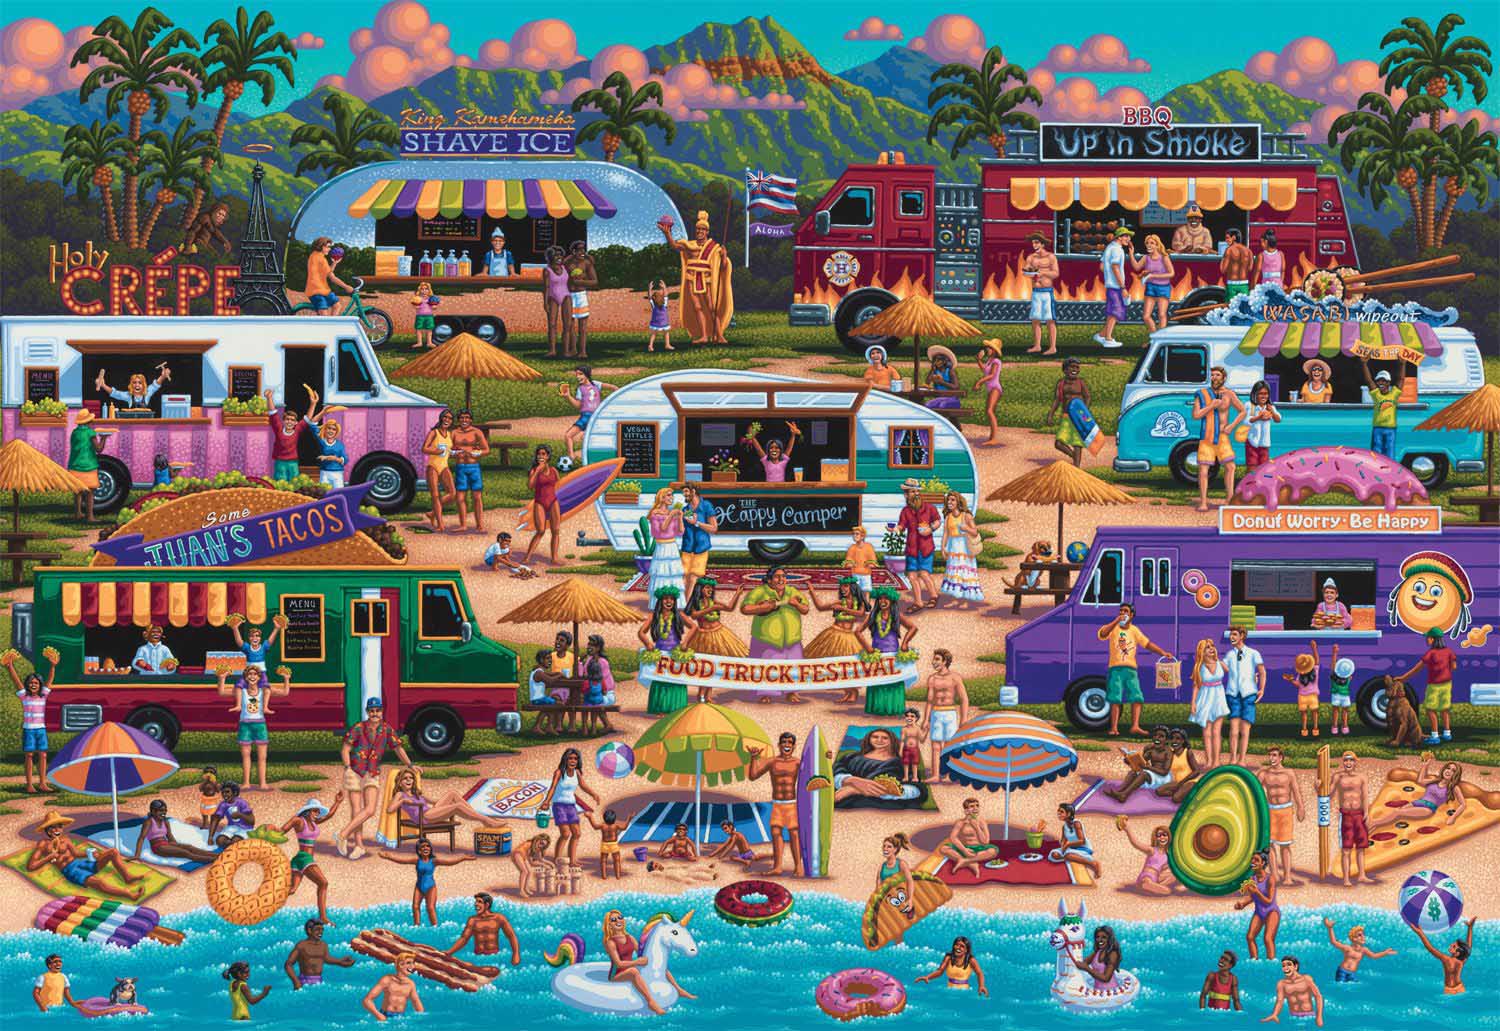 Hawaiian Food Truck Festival - Scratch and Dent Summer Jigsaw Puzzle